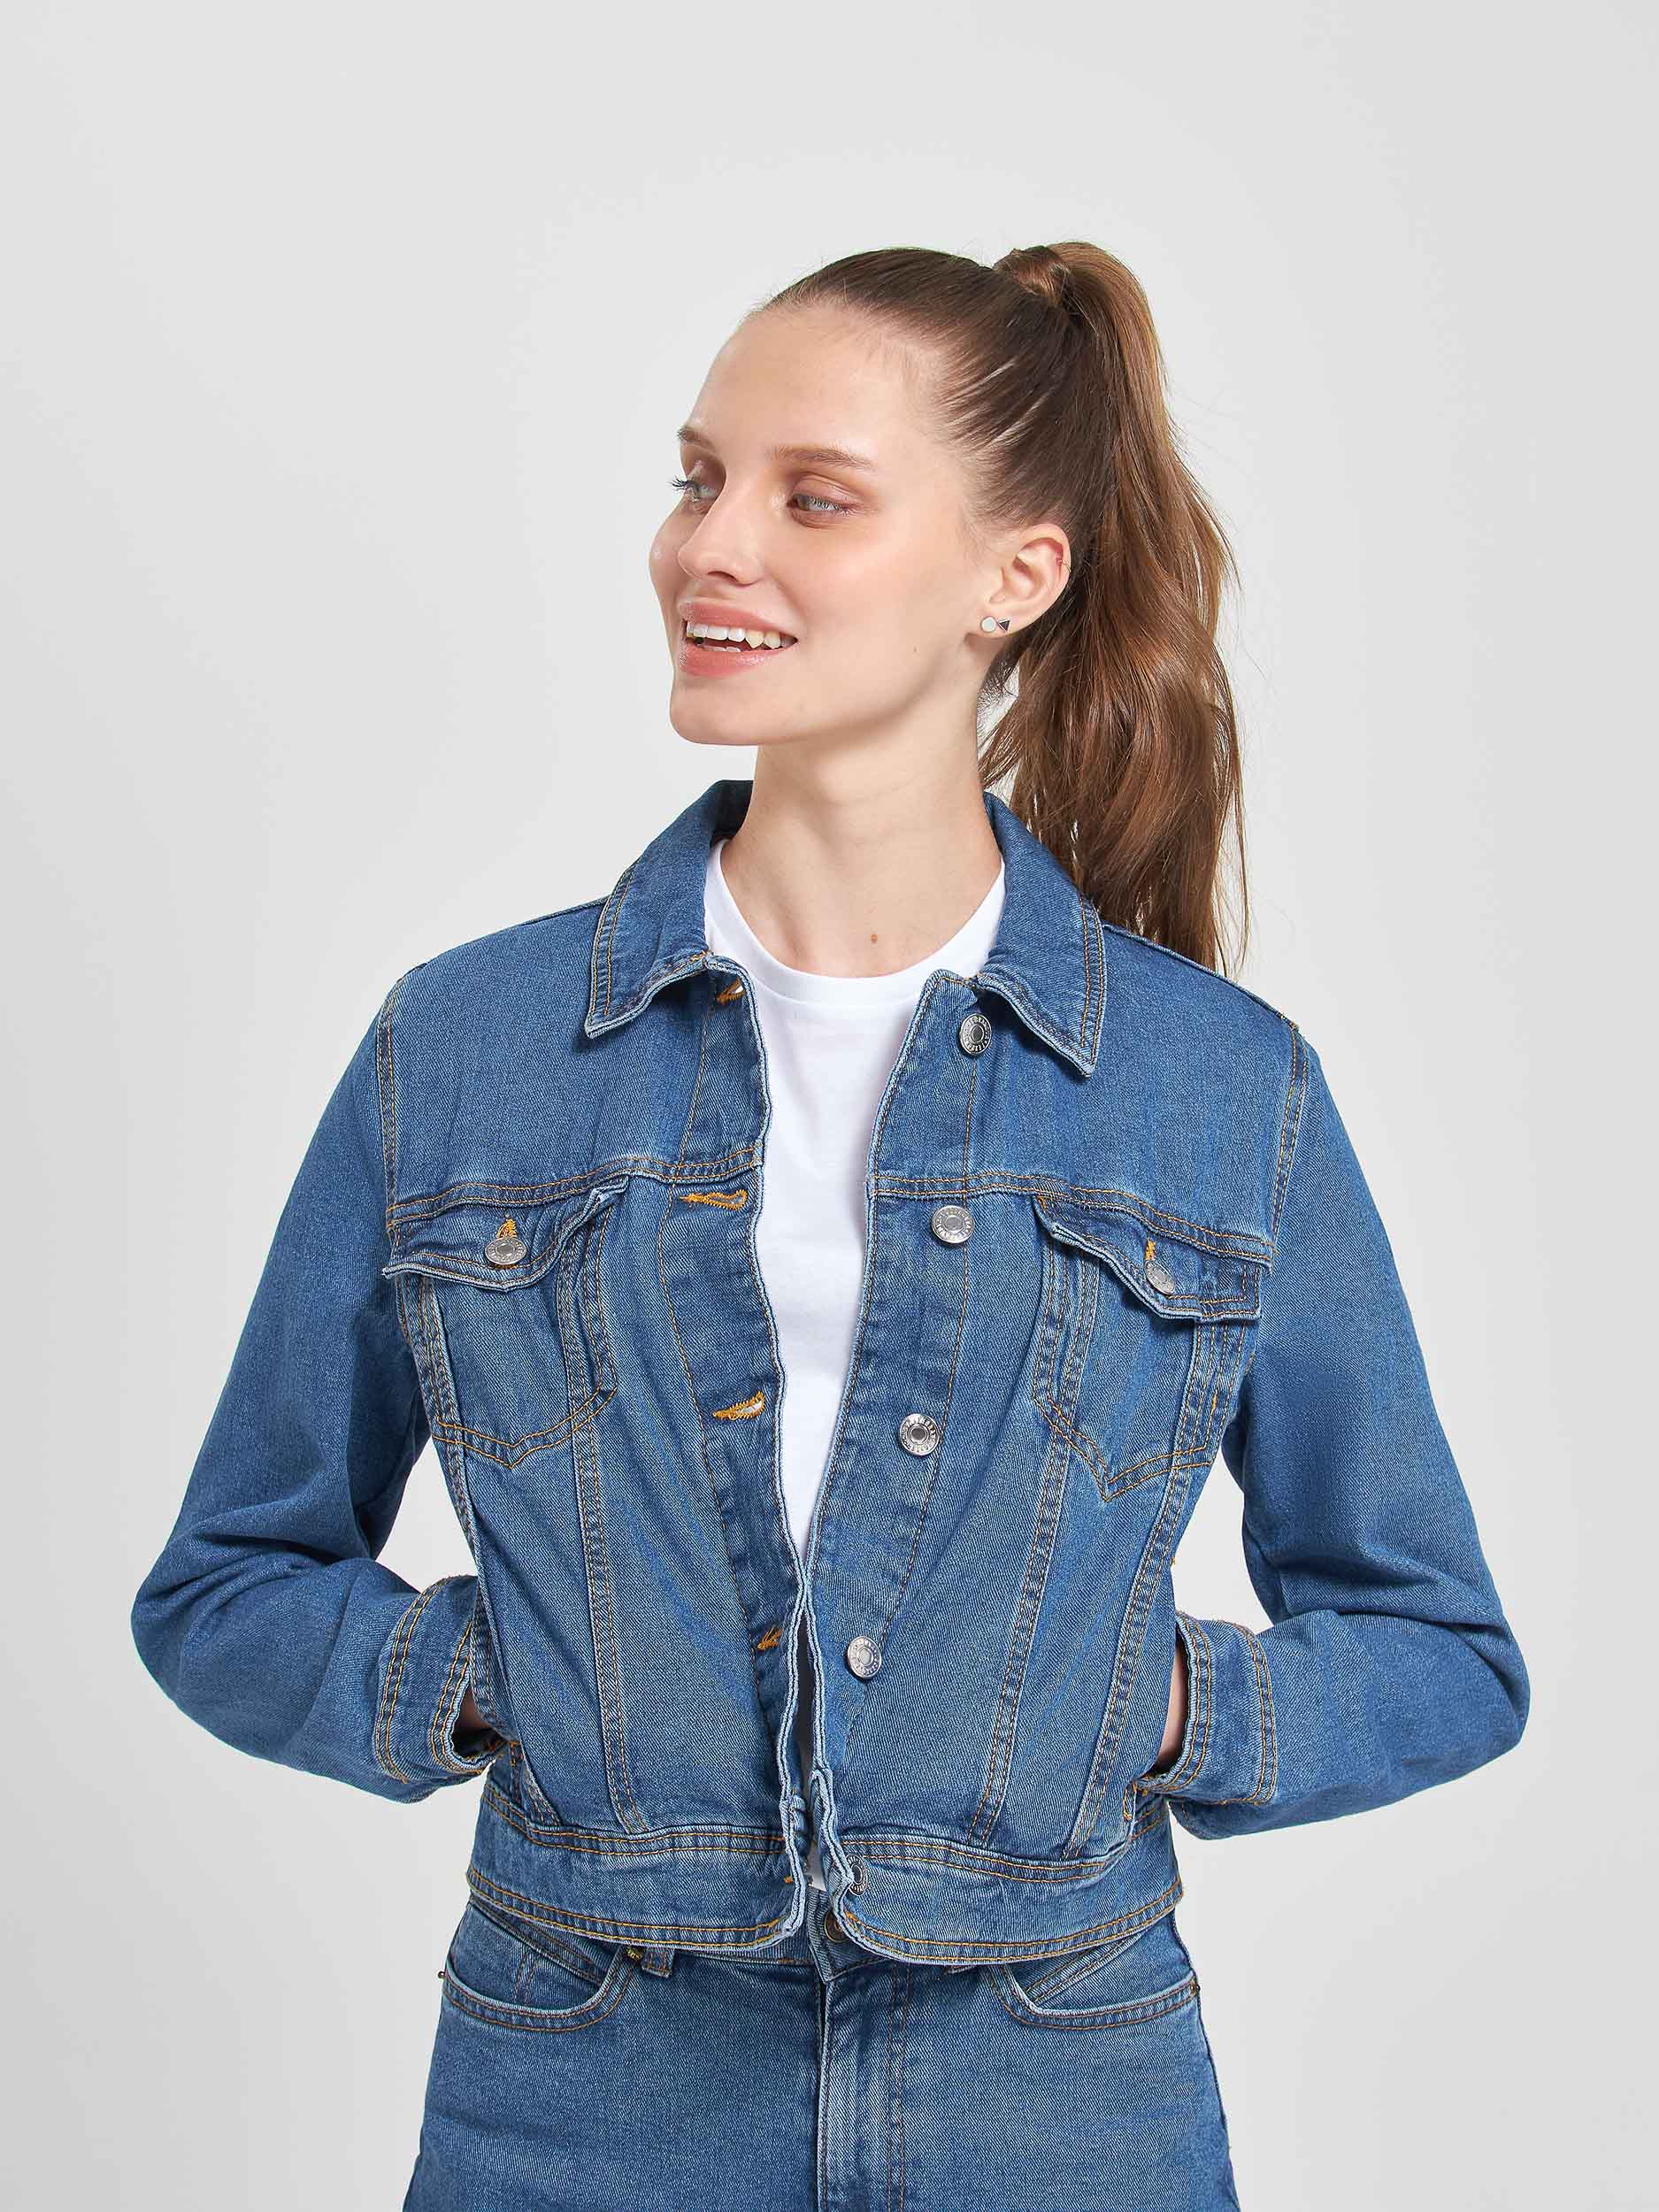 denim short jackets for womens online